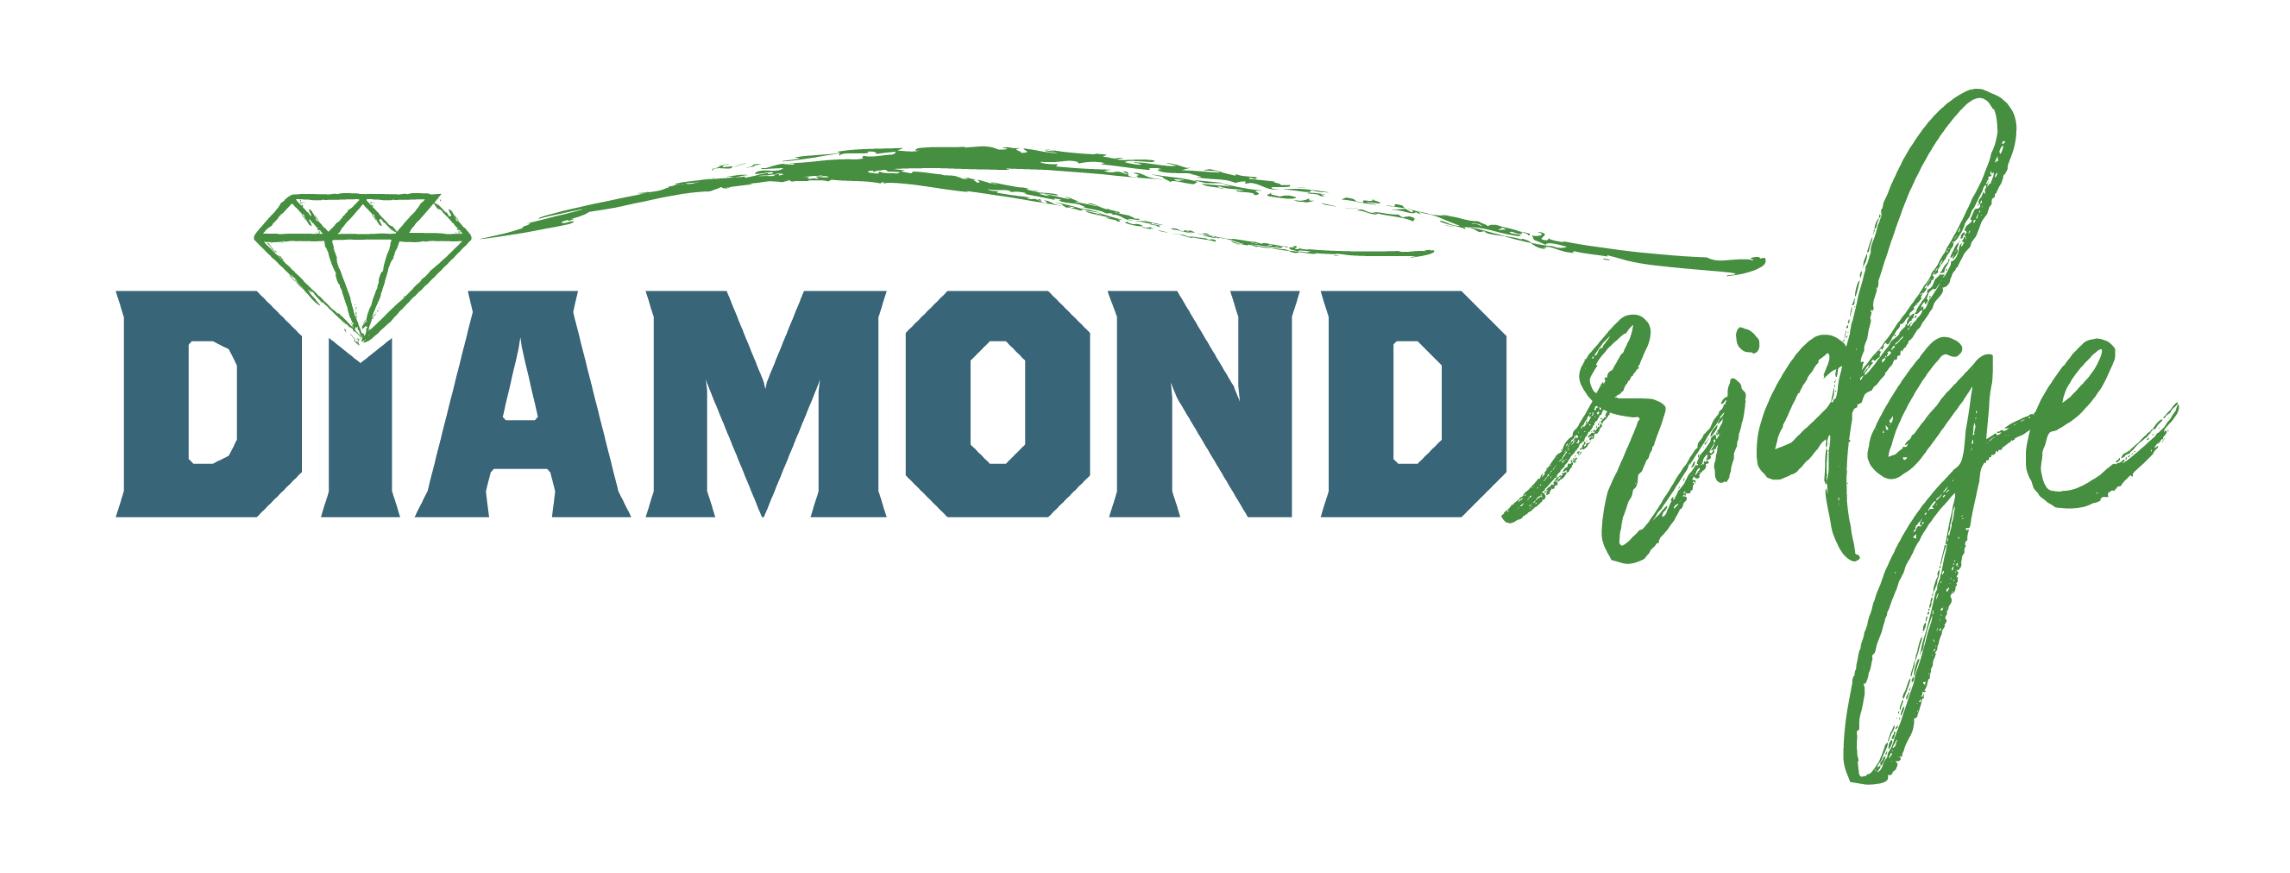 Diamond Ridge Logo